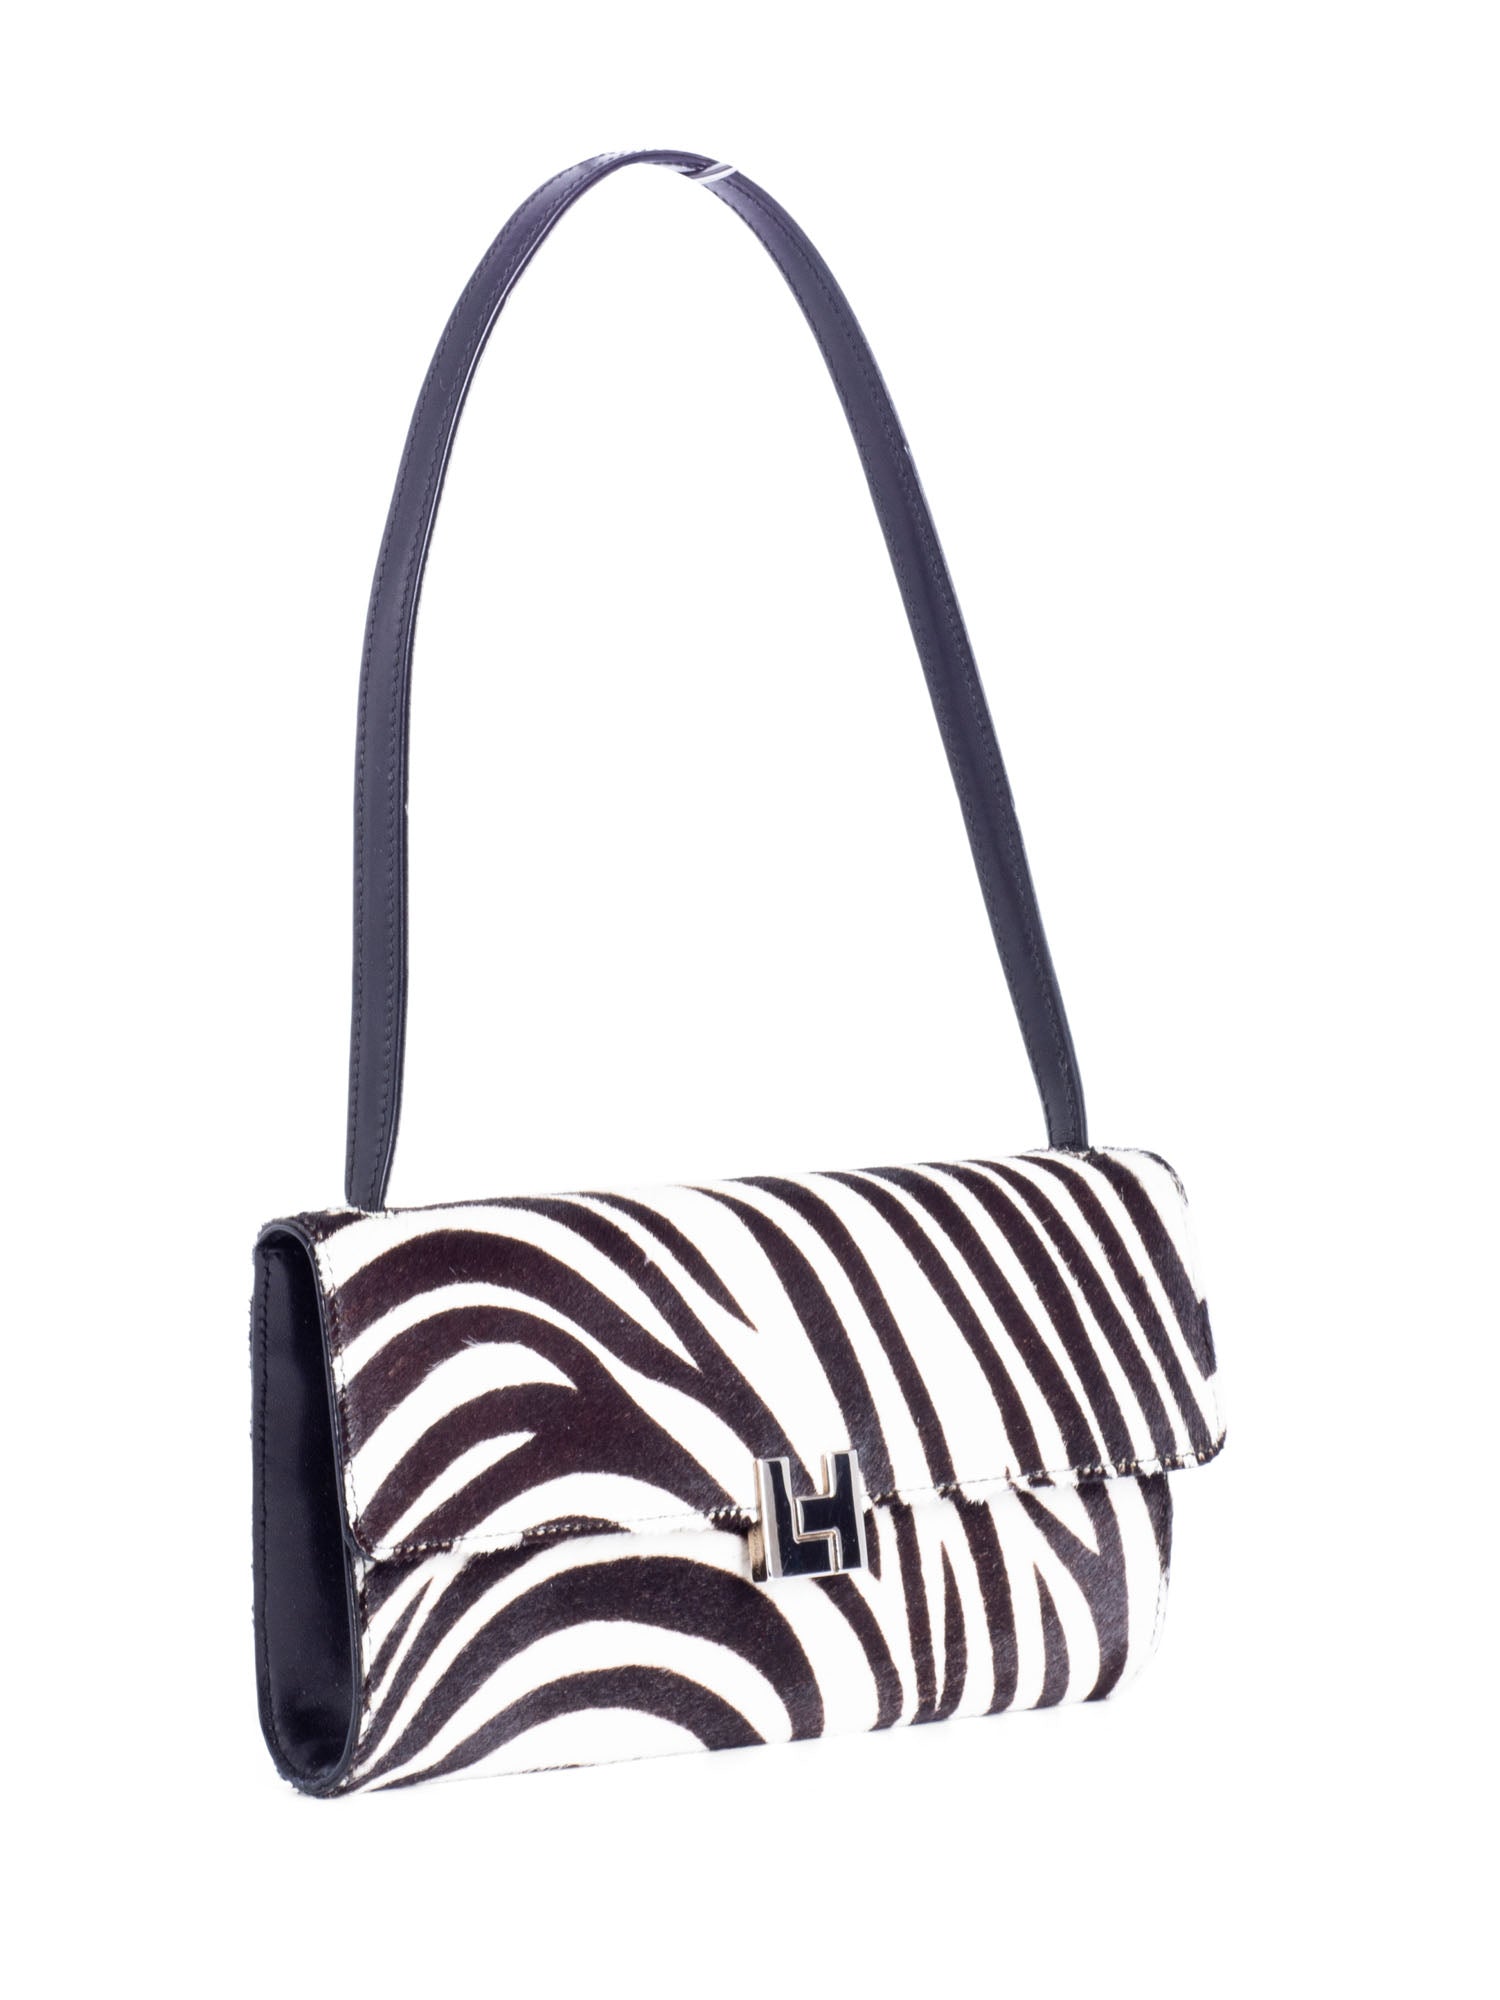 Lambertson Truex Zebra Print Small Top Handle Flap Bag Black White-designer resale